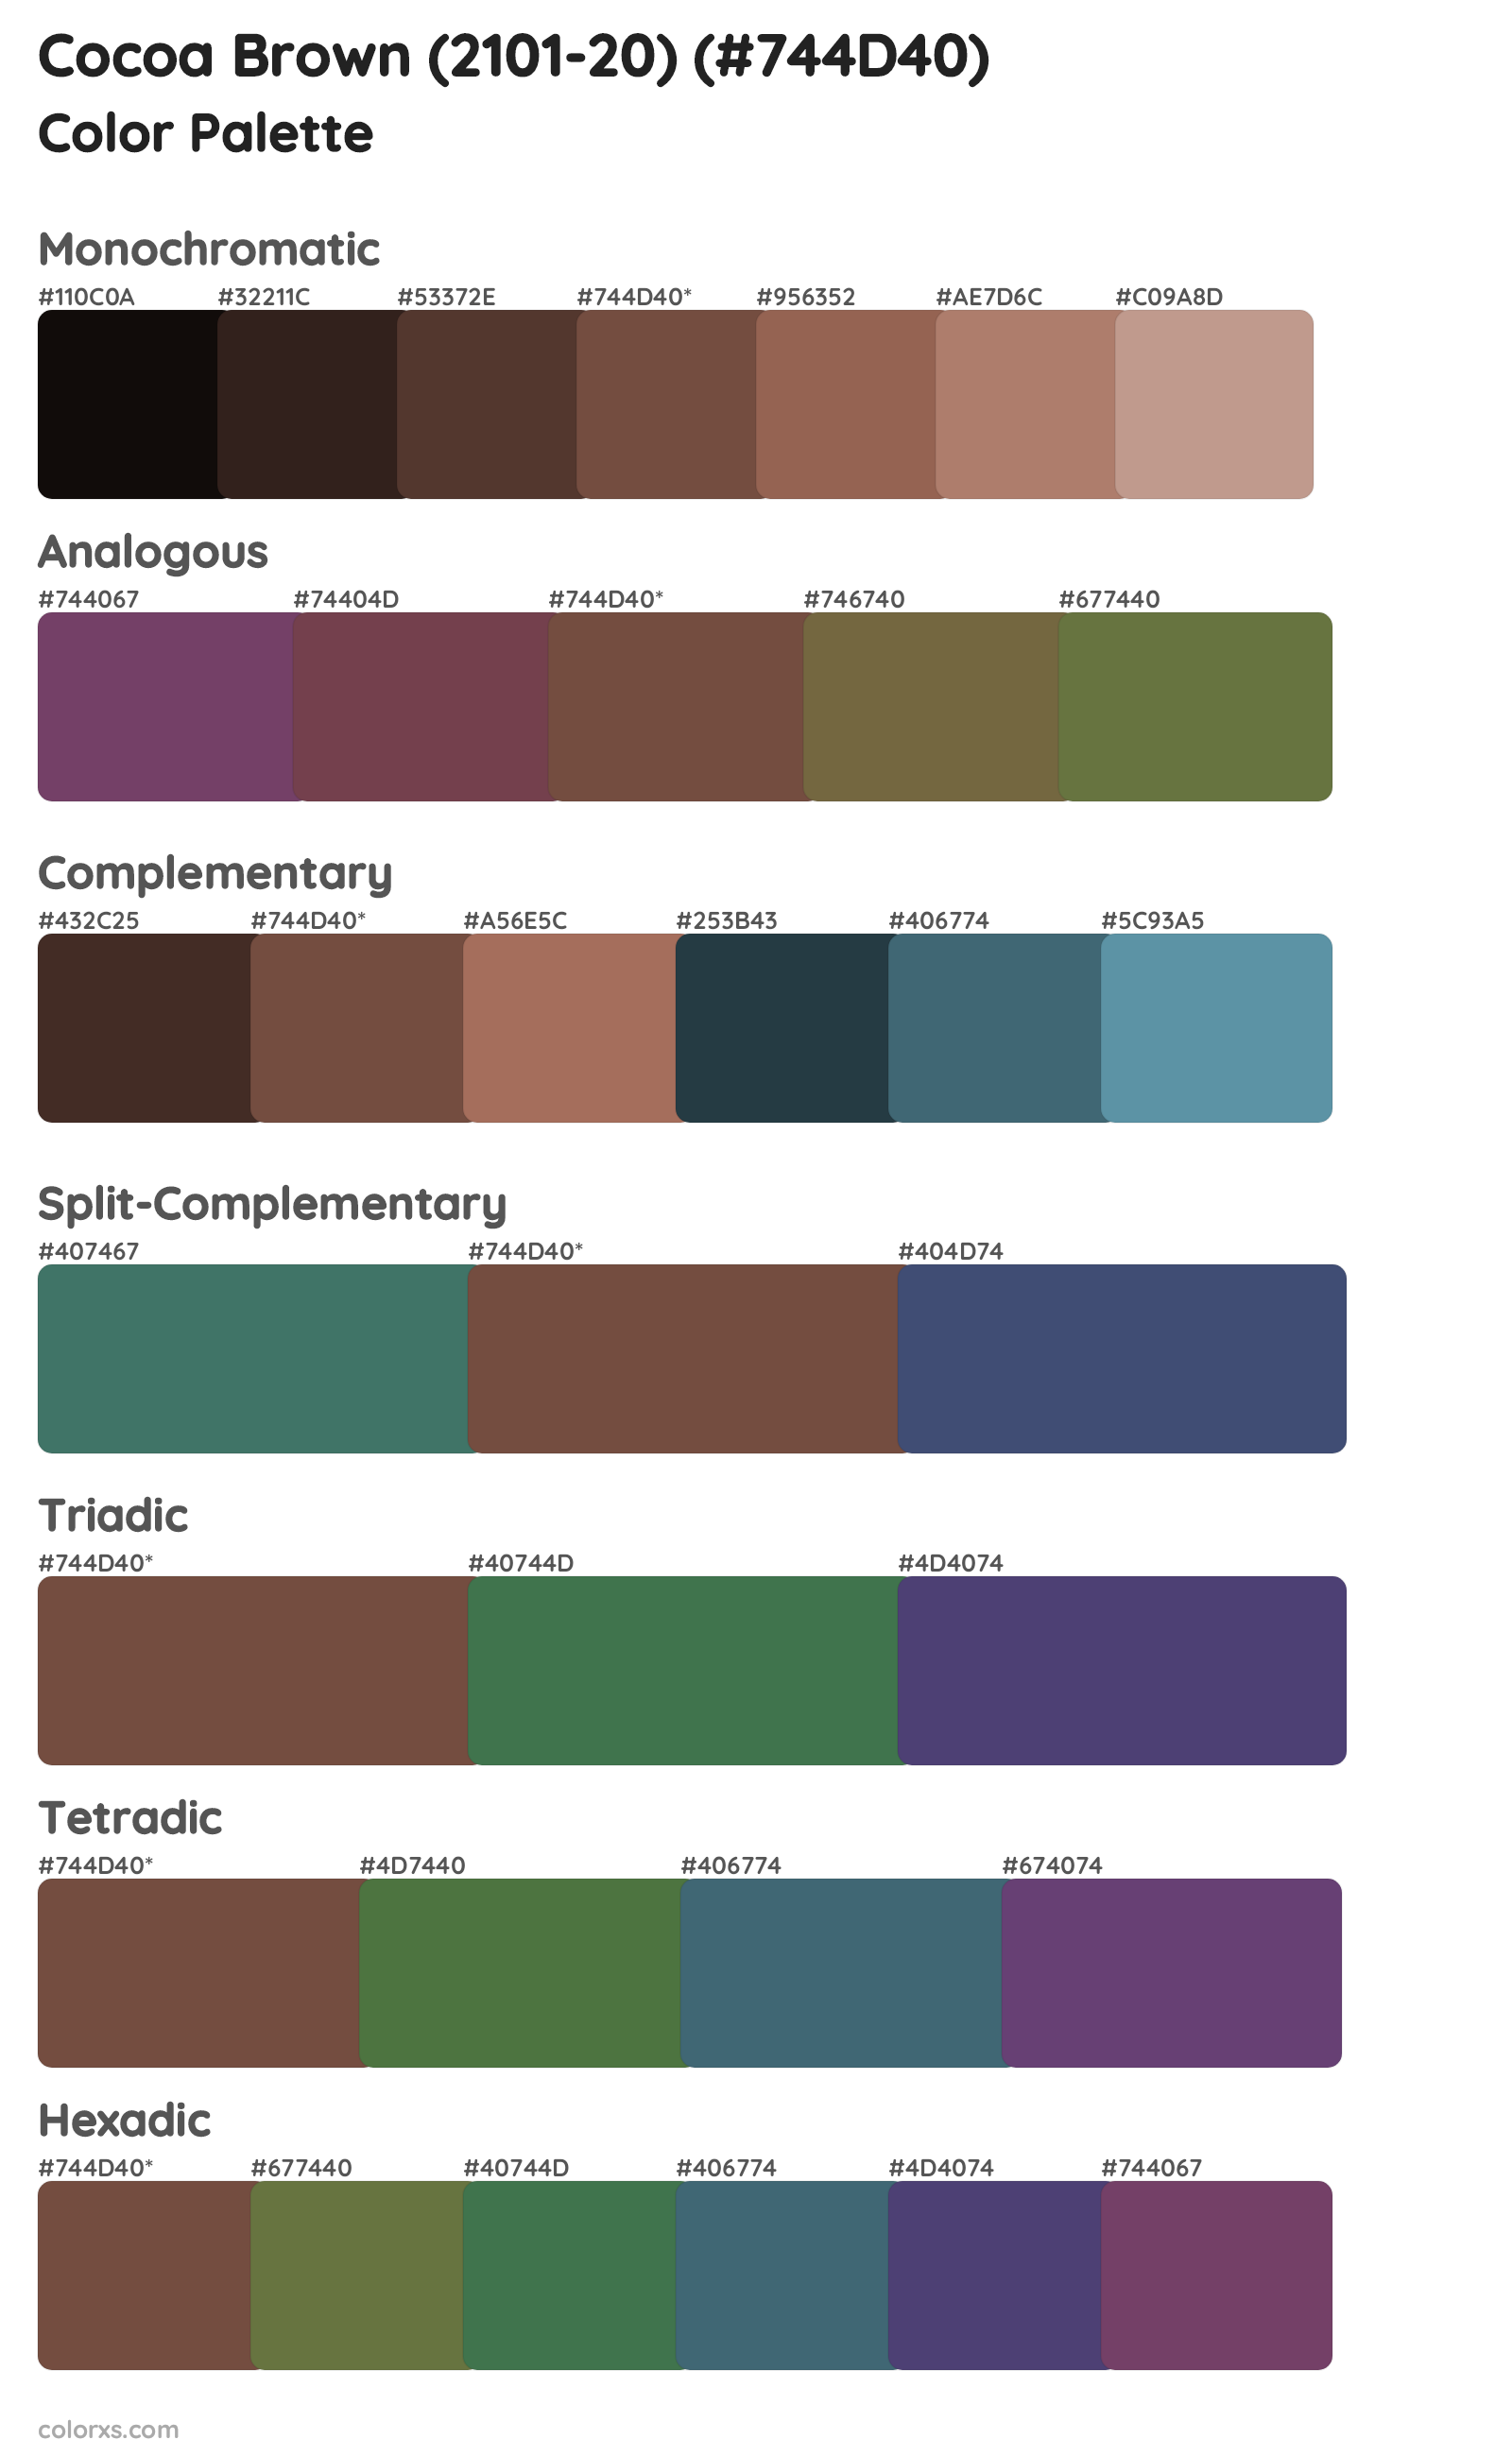 Cocoa Brown (2101-20) Color Scheme Palettes